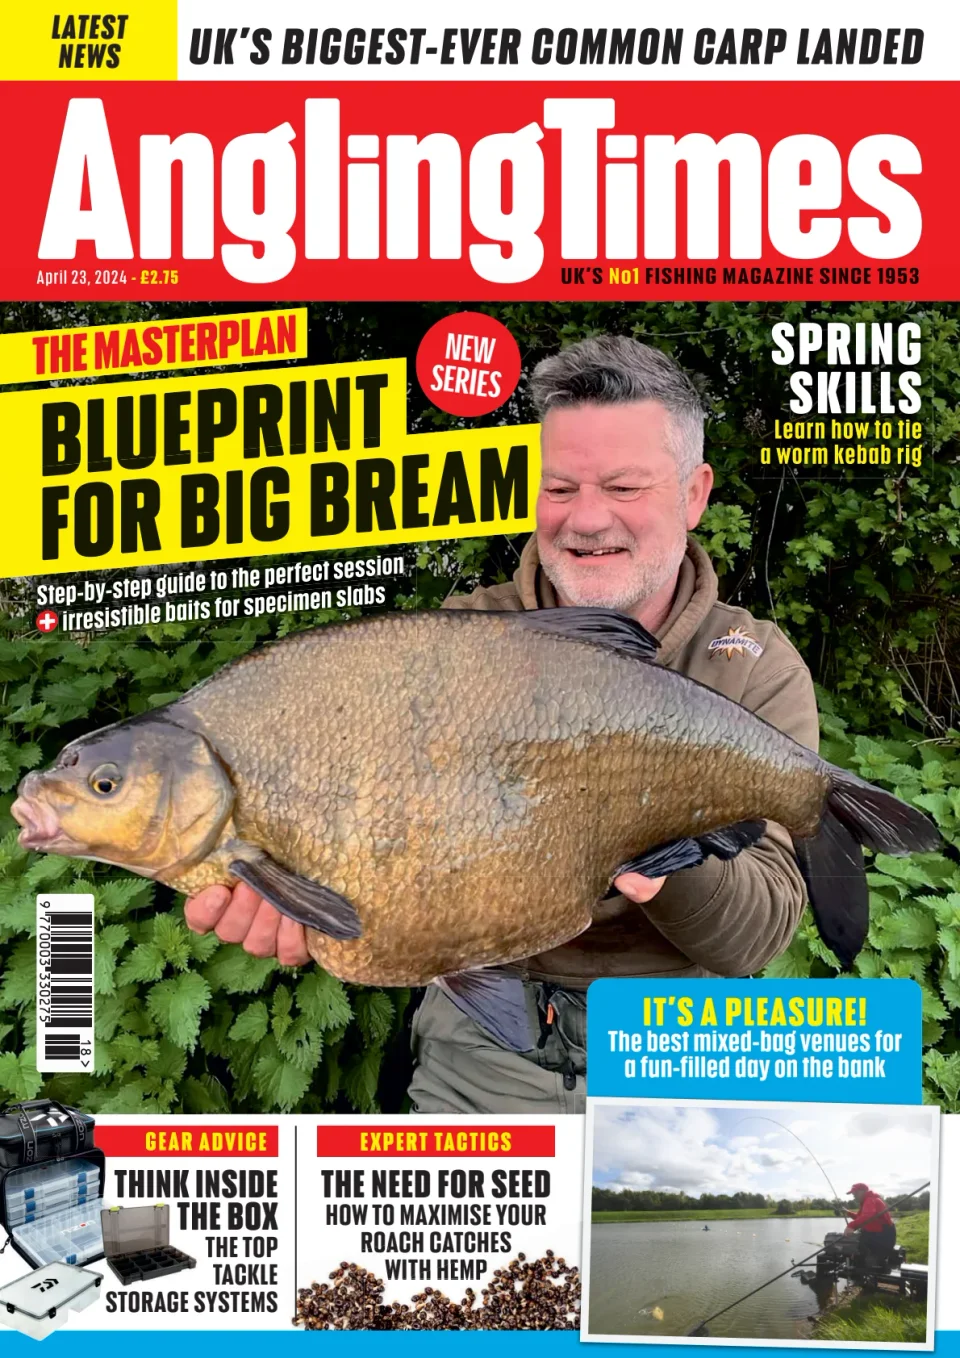 Angling Times (UK)